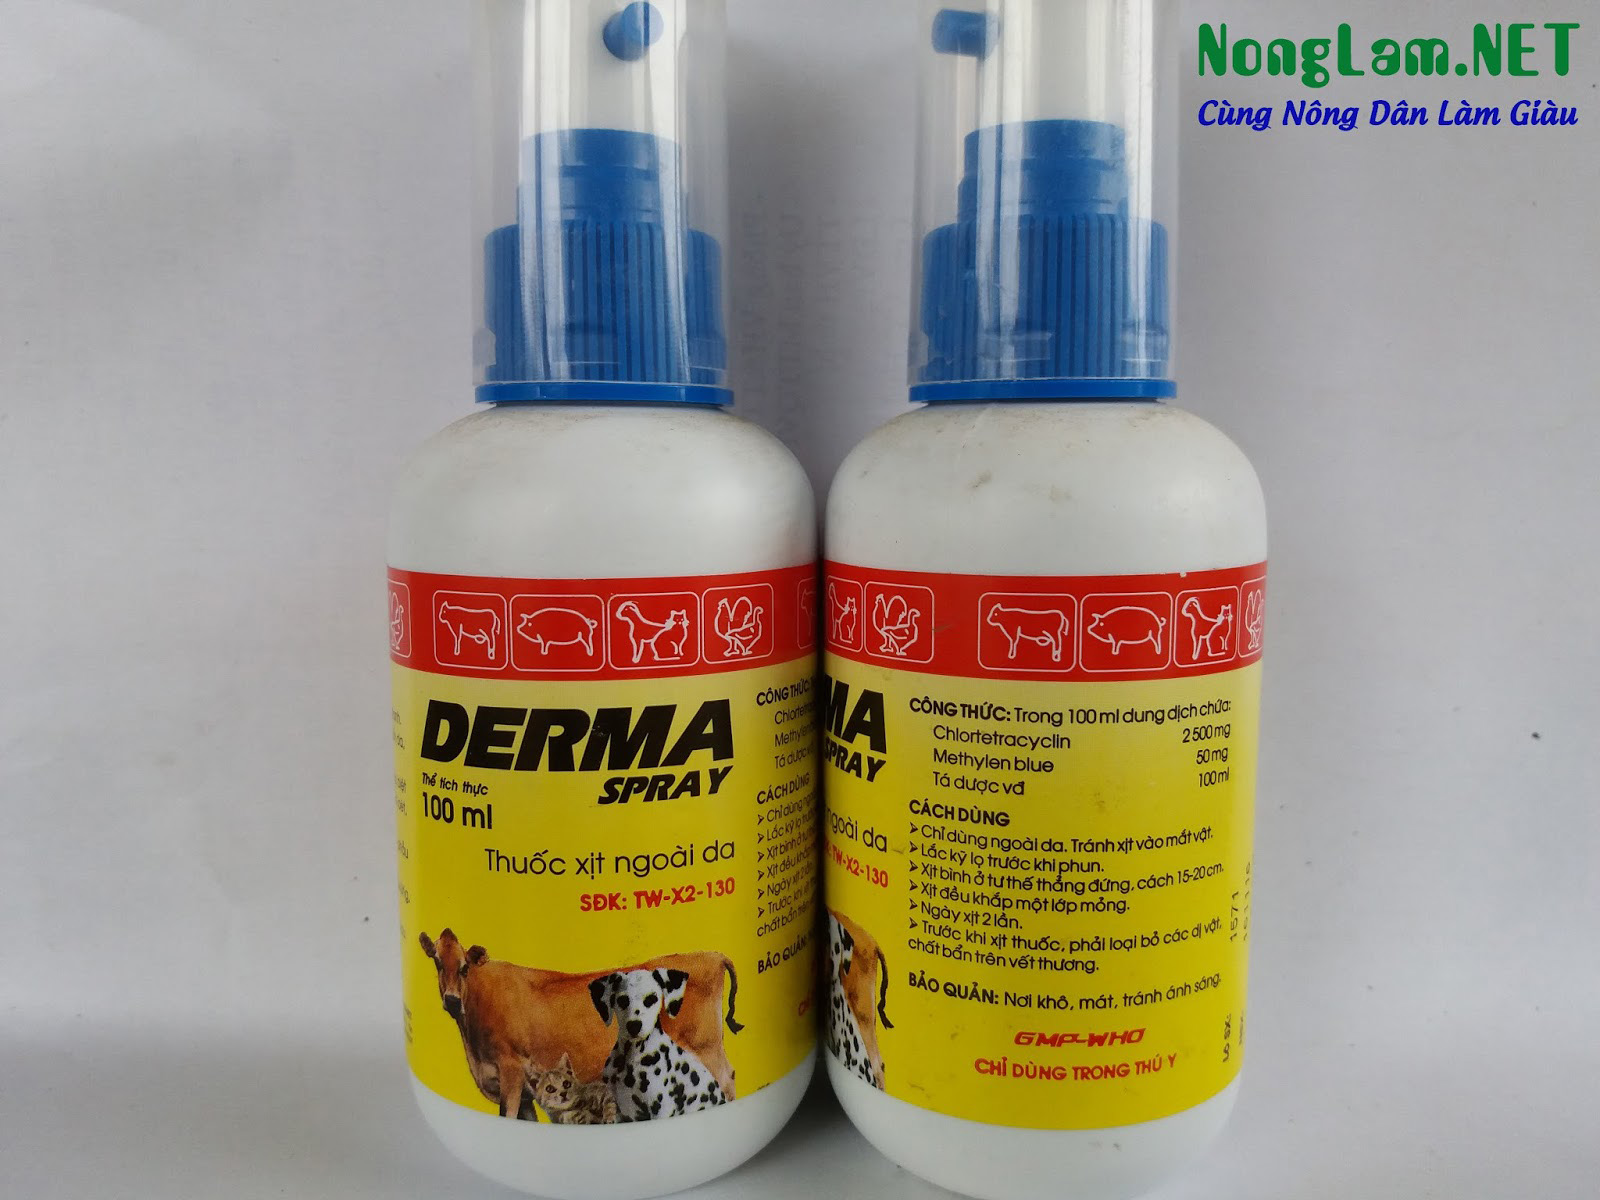 derma spray